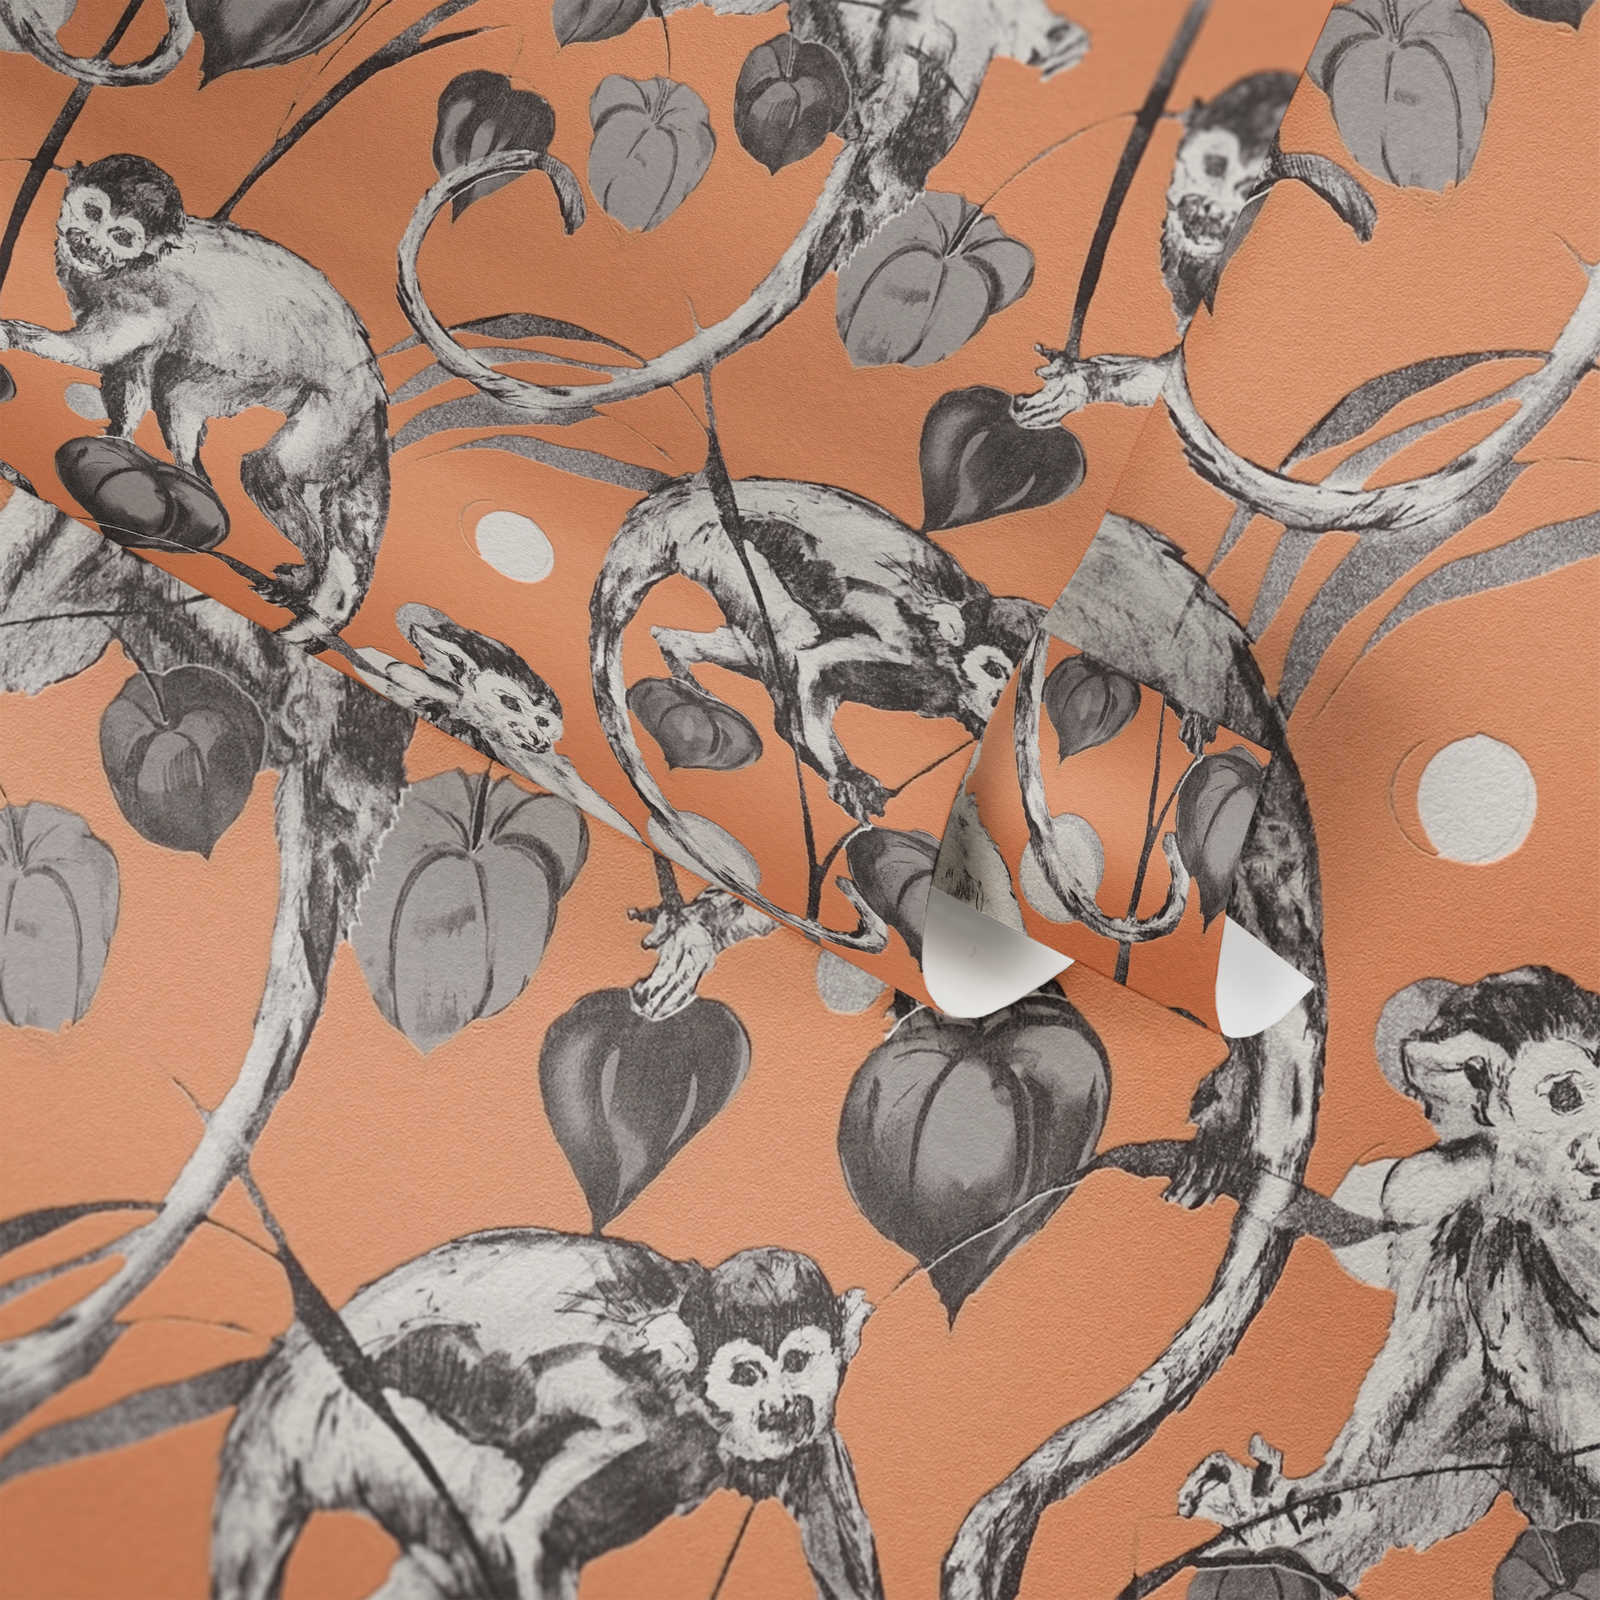             MICHALSKY wallpaper monkeys & jungle motif - orange, grey
        